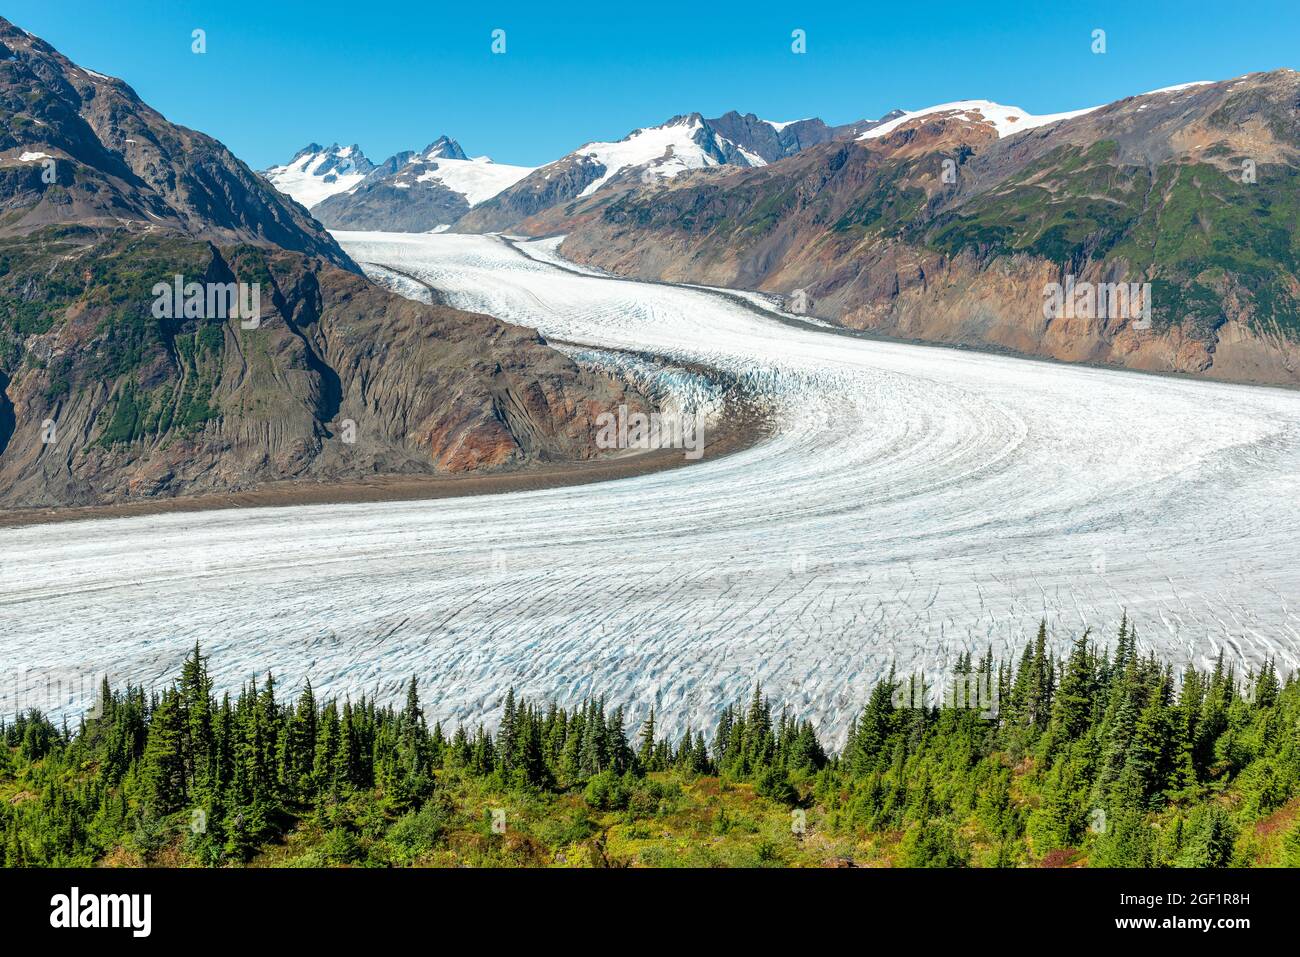 Salmon glacier near Stewart, British Columbia, Canada. Stock Photo